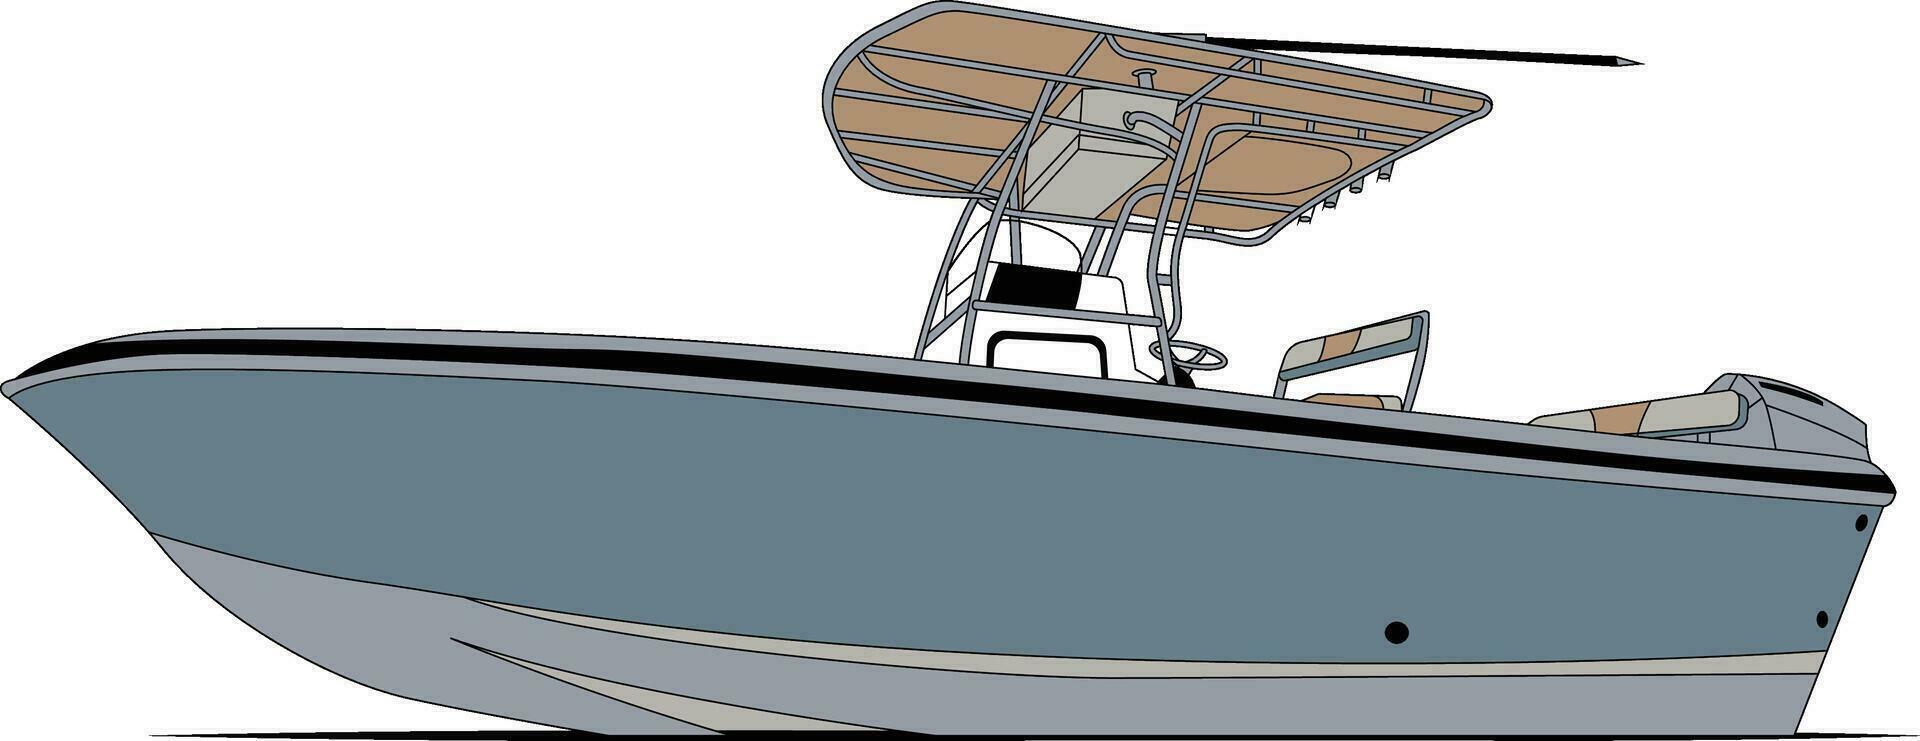 barco vector, lado ver pescar barco vector línea Arte ilustración